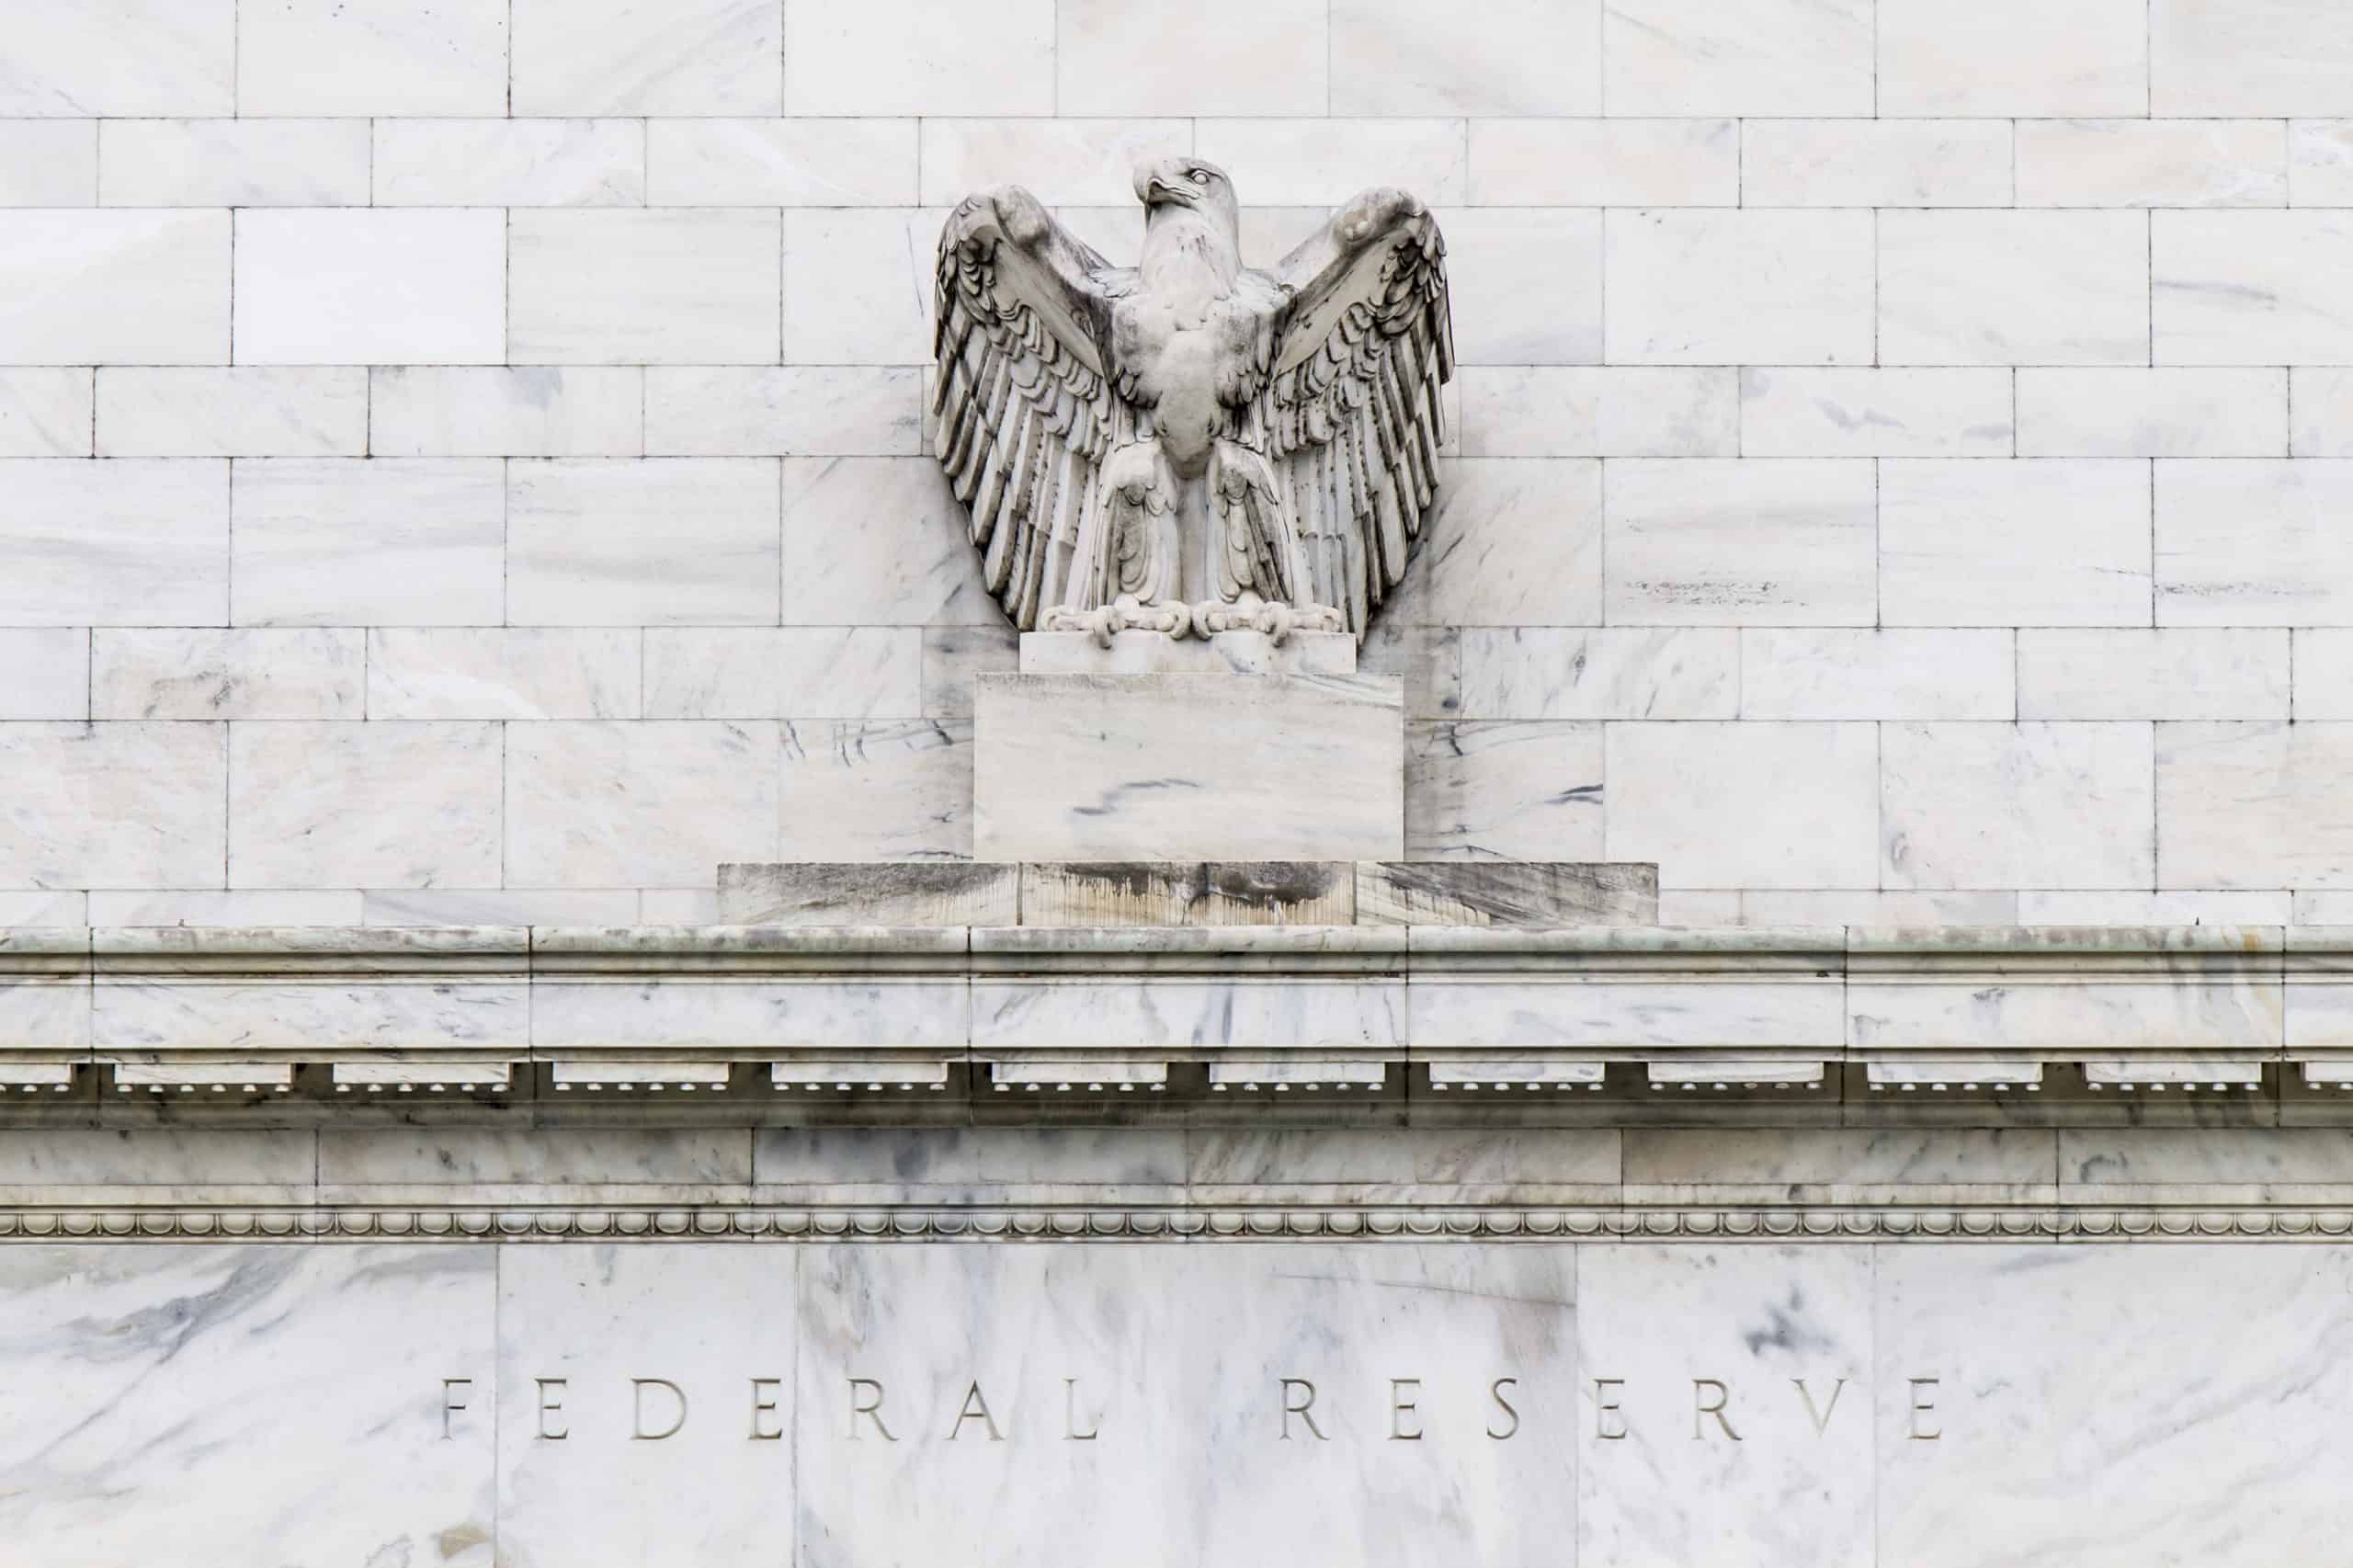 Fed’s Raise Interest Rates – It’s Official